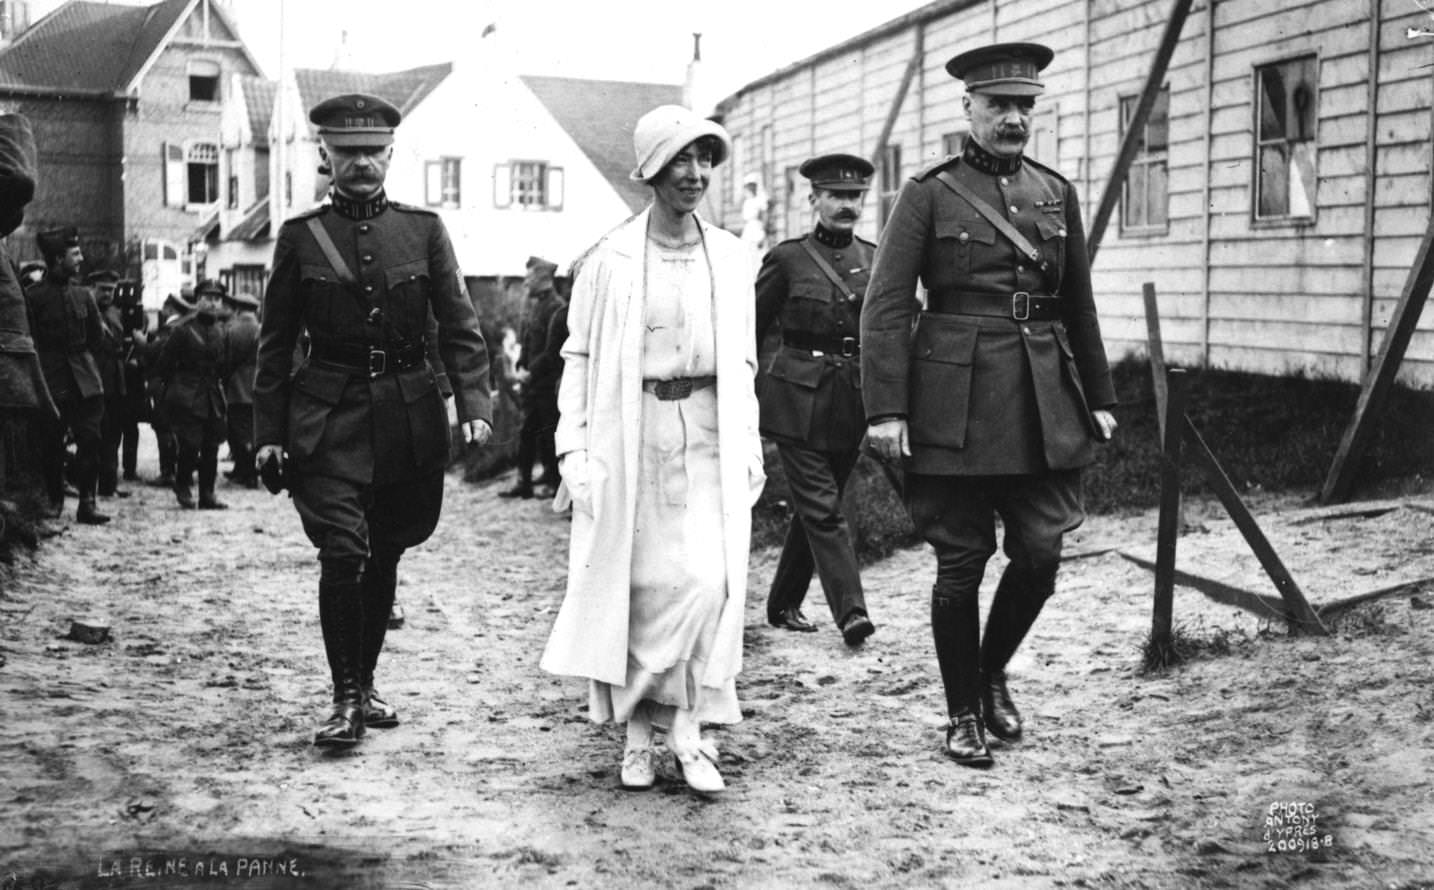 Elizabeth, Queen of the Belgians (1876 - 1965) in cloche hat, wife of King Albert, accompanied by soldiers, 1920